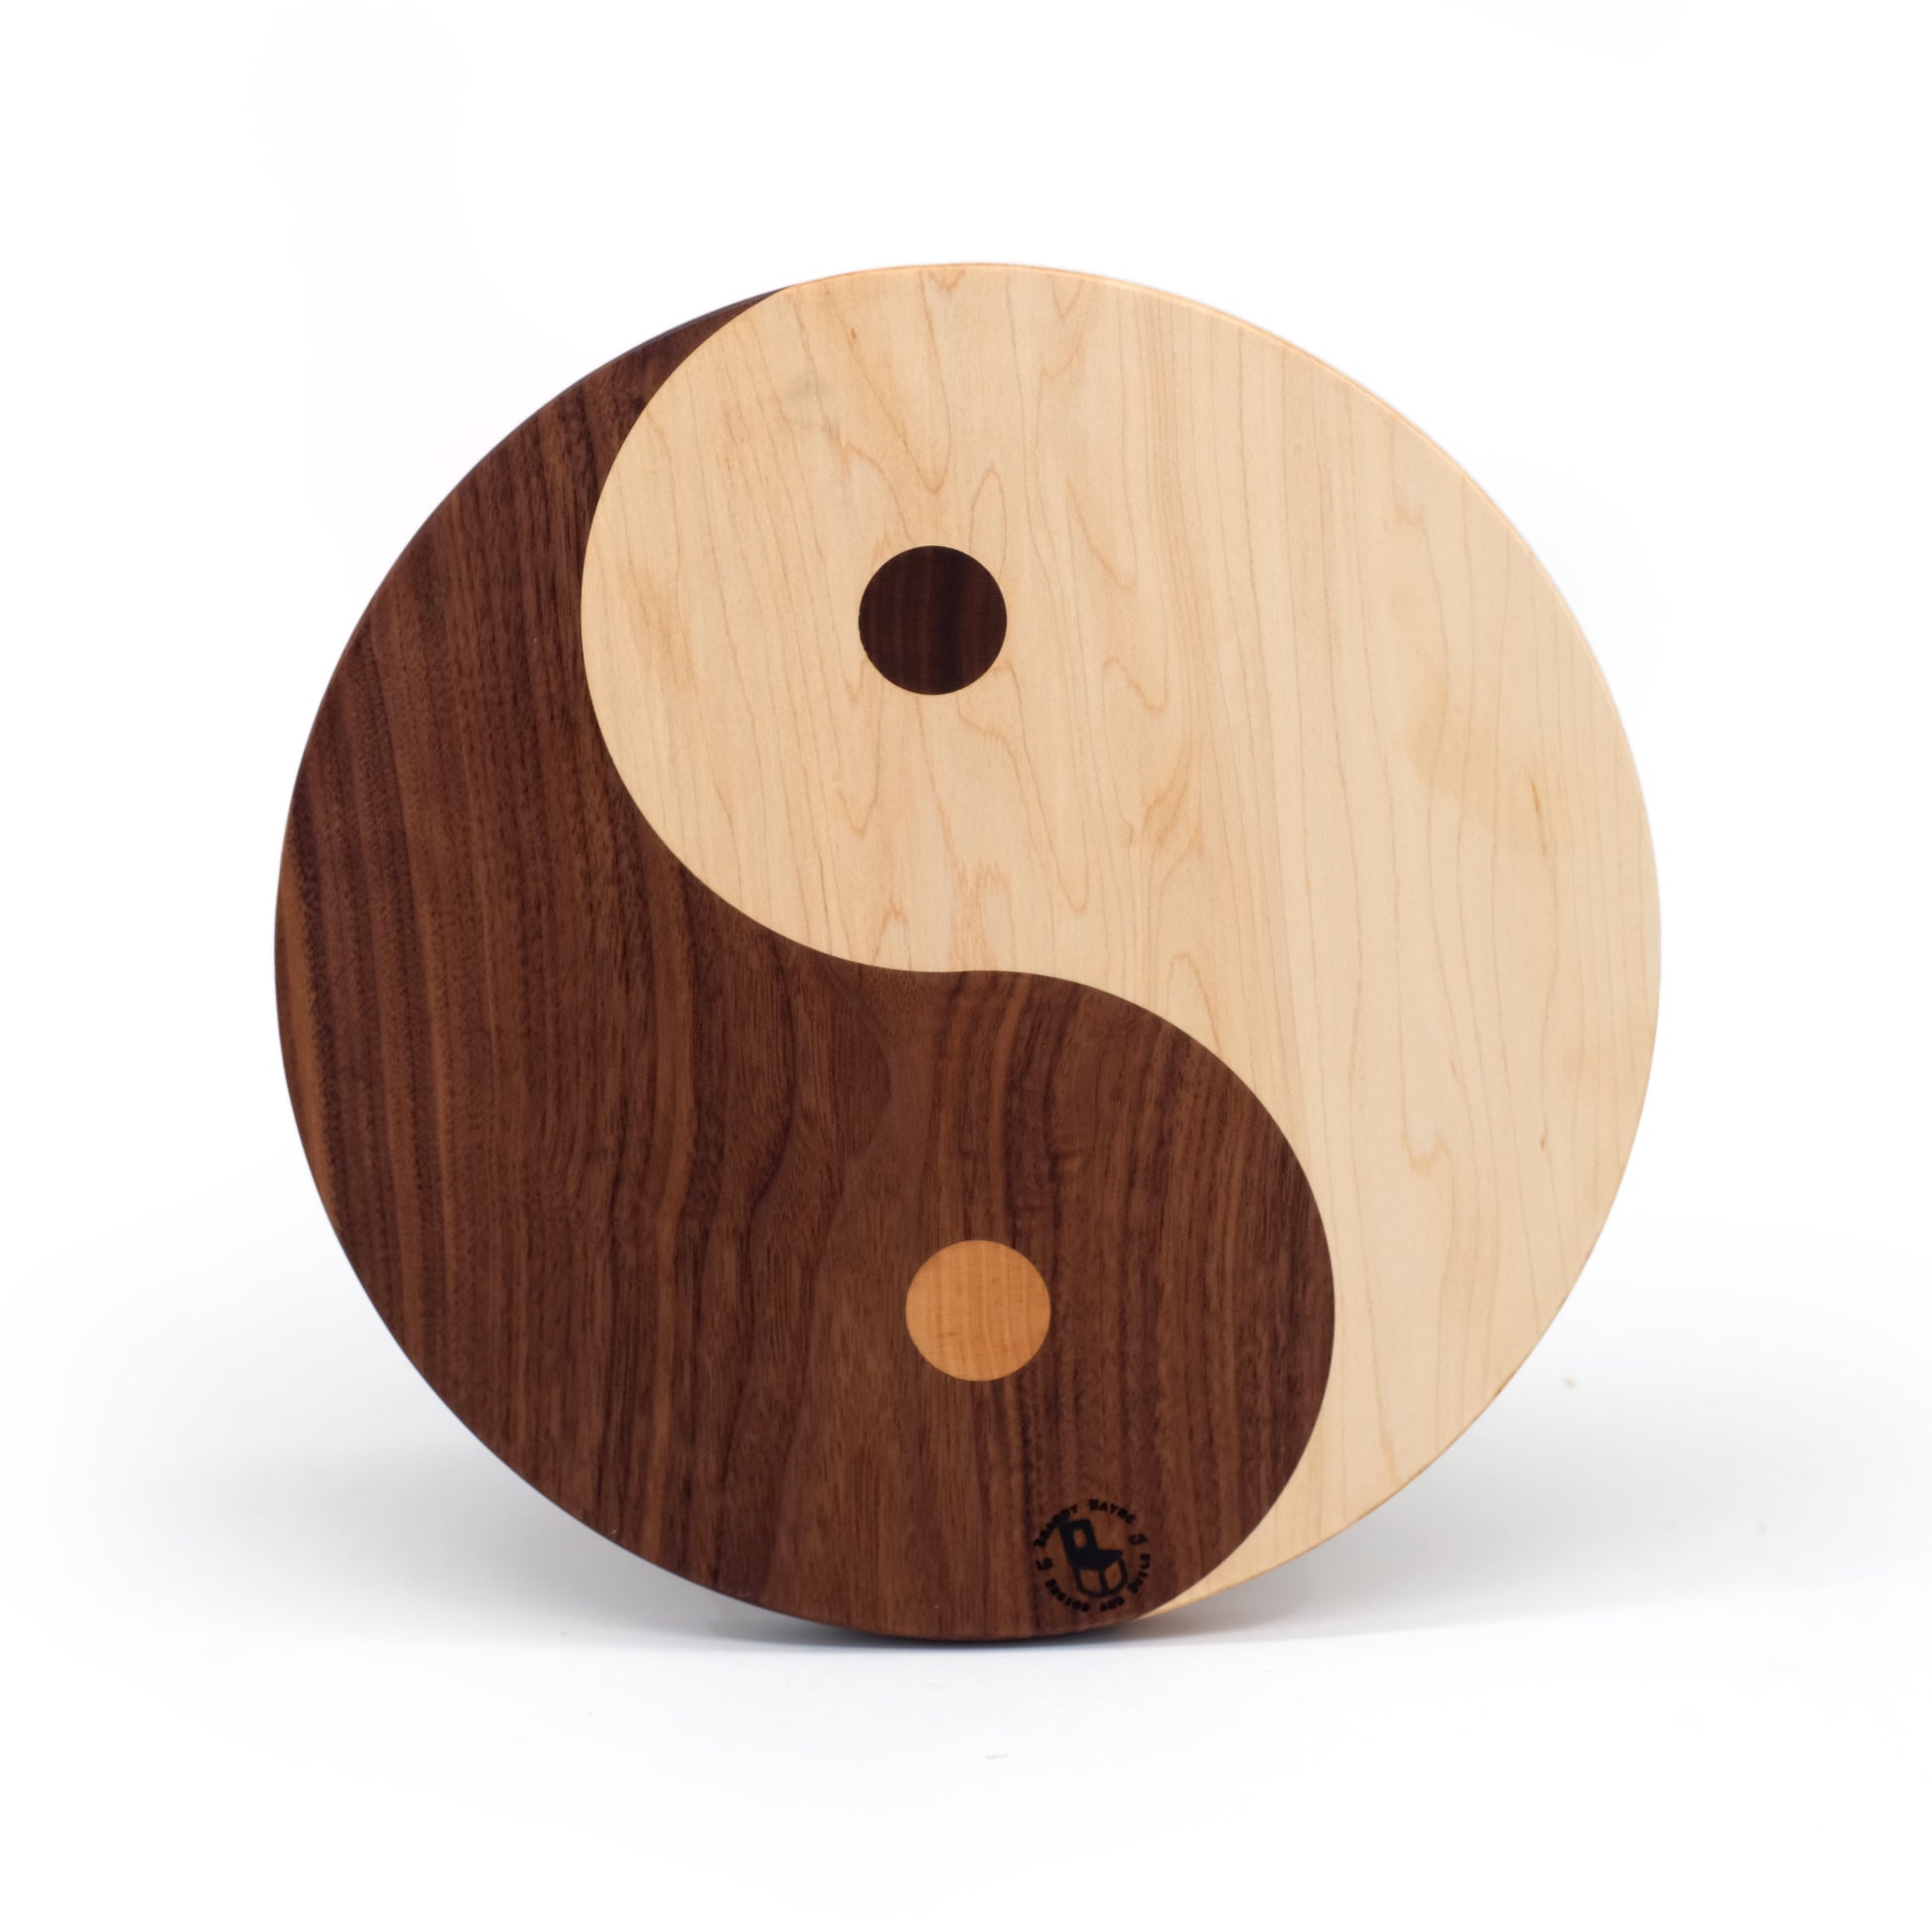 yin yang cutting board made of walnut and maple